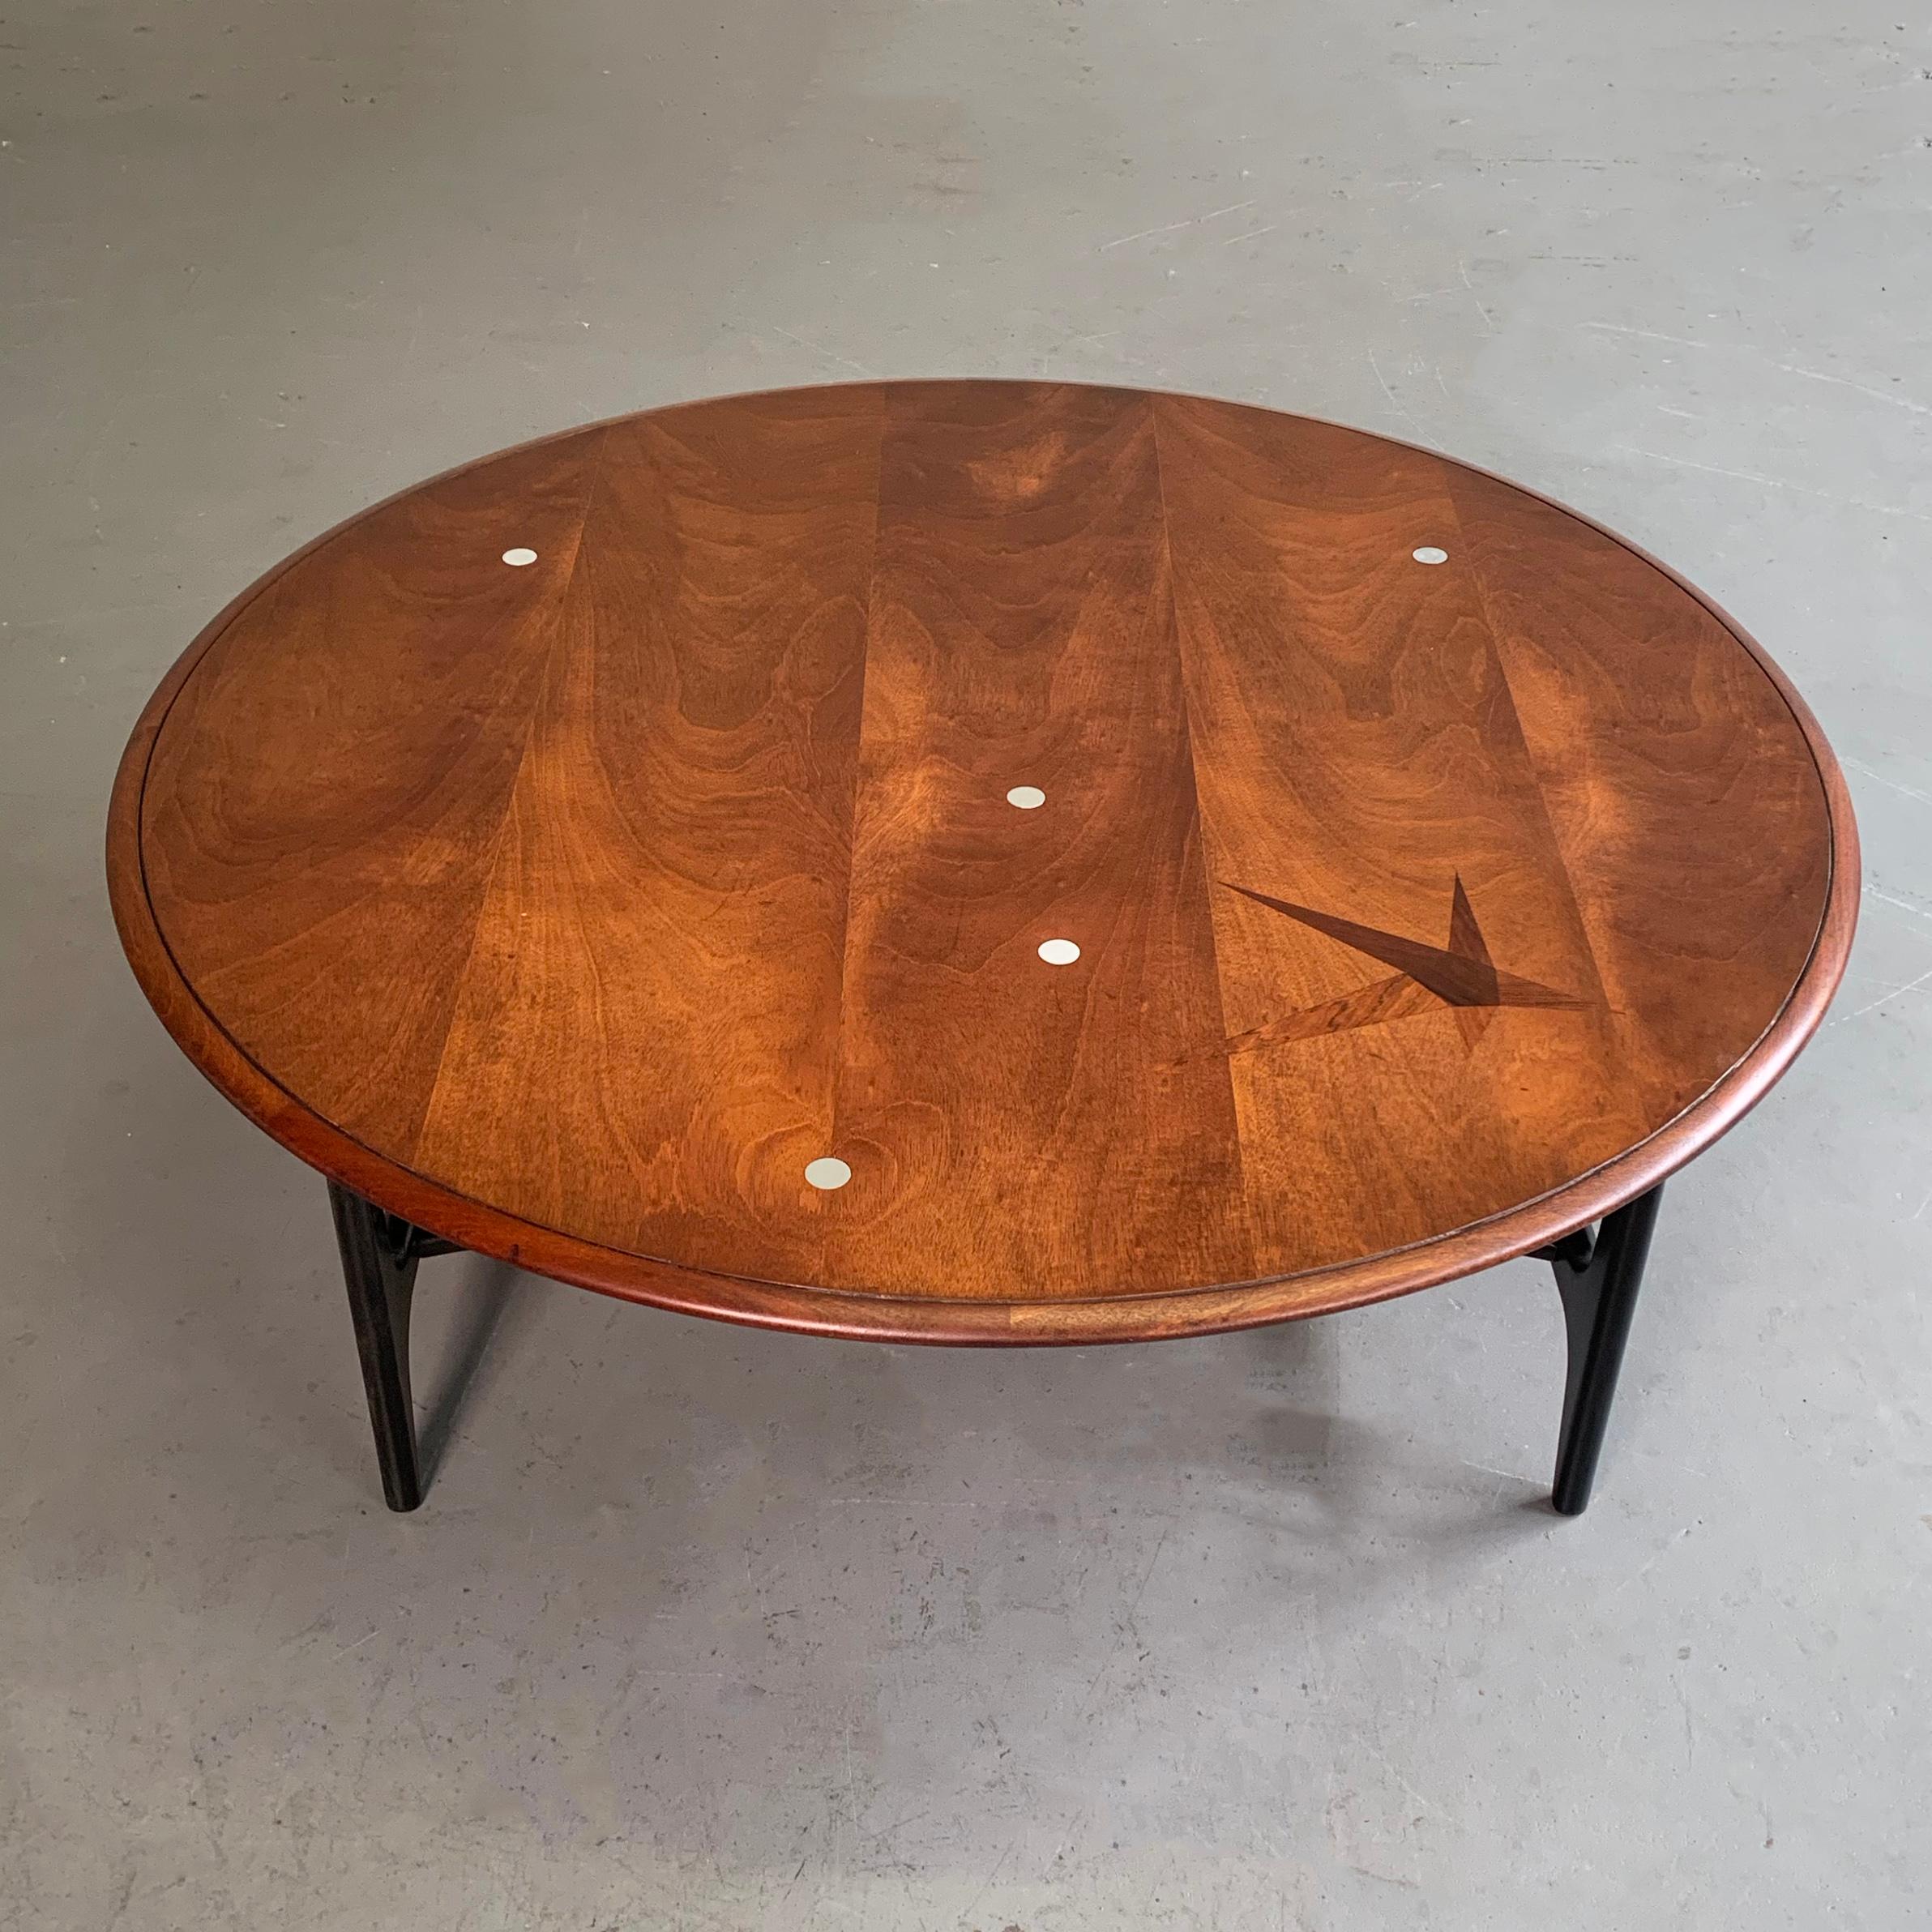 20th Century Mid-Century Modern Round Inlay Walnut Coffee Table by Lane Alta Vista